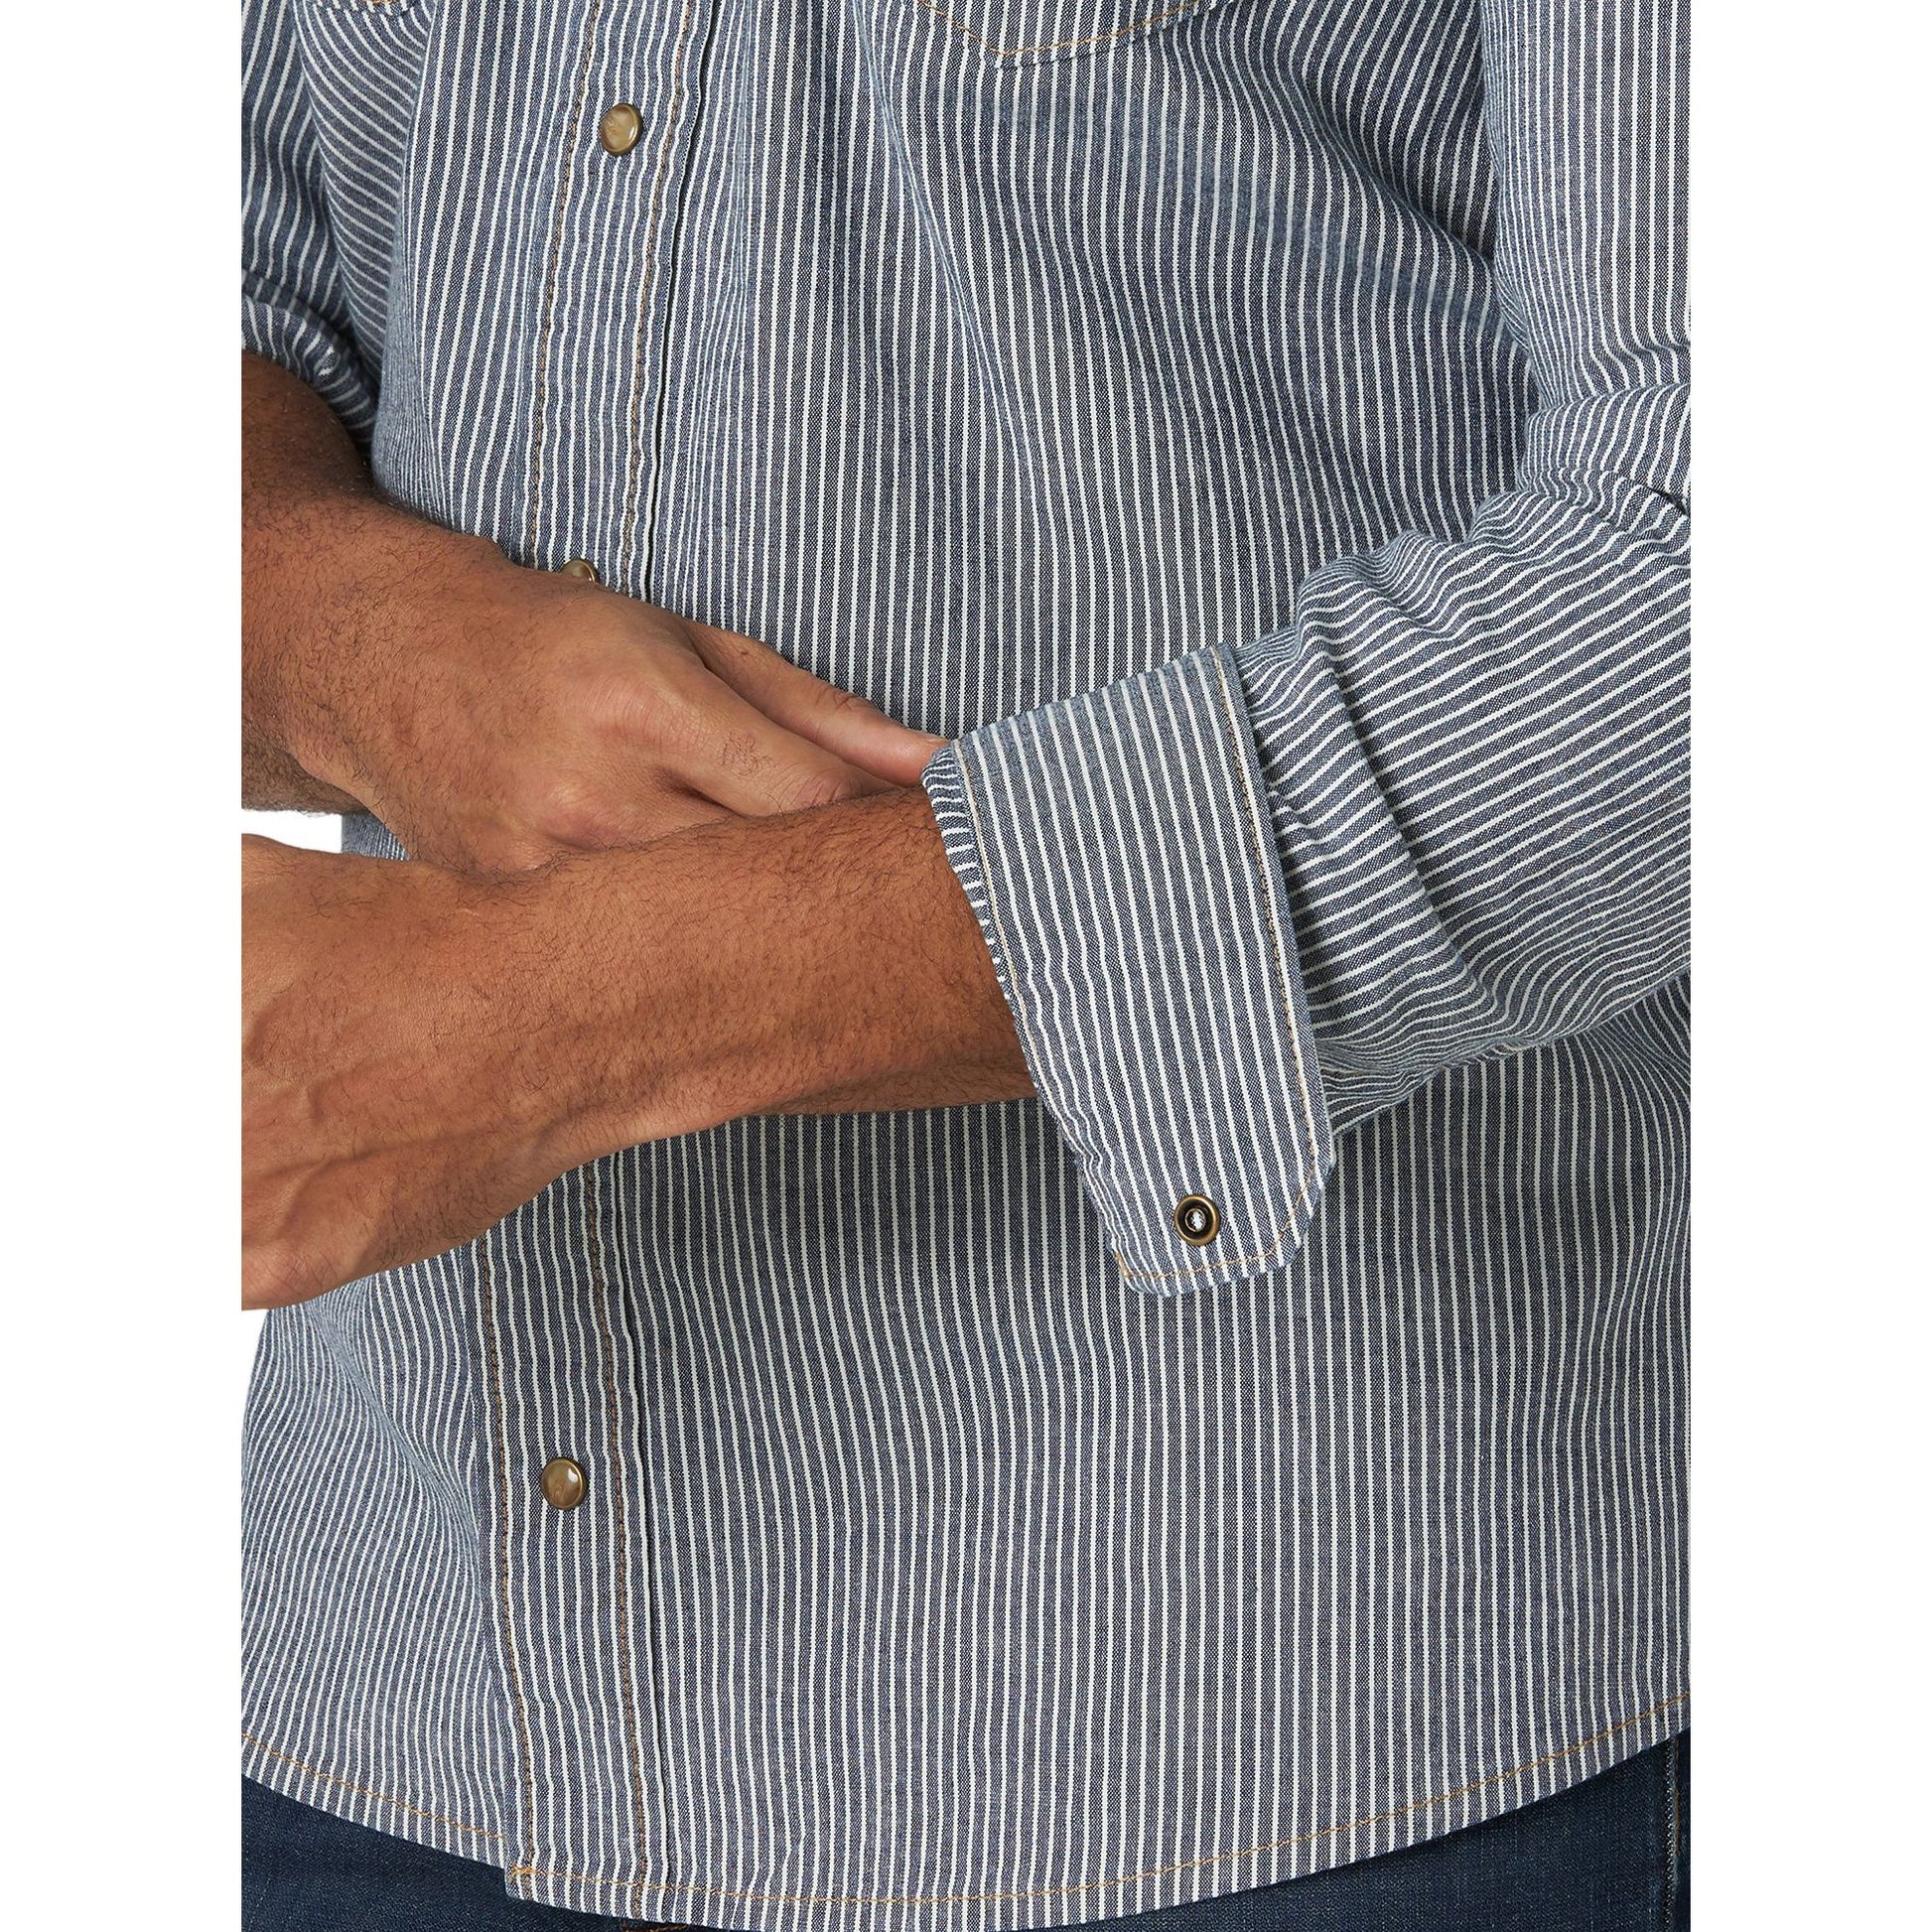 Men's 2XL Long Sleeve Premium Slim Fit Denim Shirt 